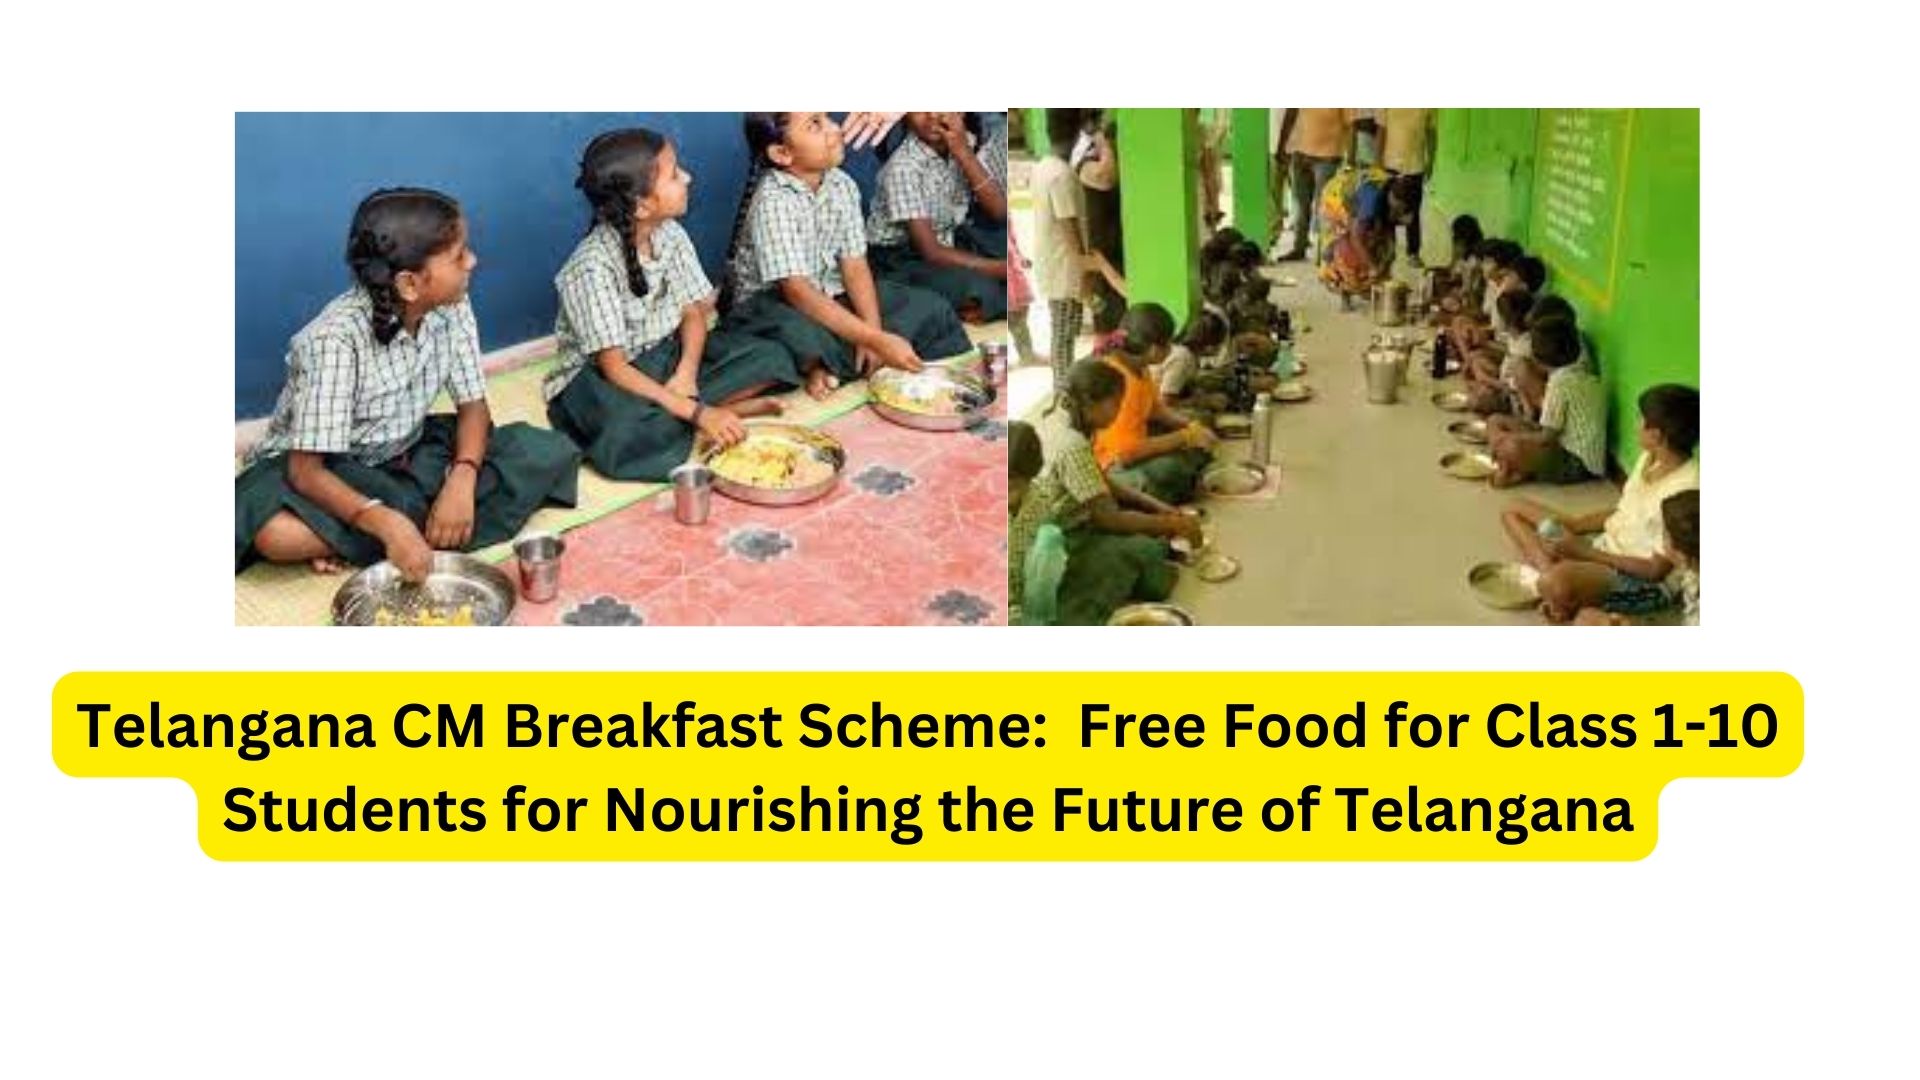 Telangana CM Breakfast Scheme: Free Food for Class 1-10 Students for Nourishing the Future of Telangana